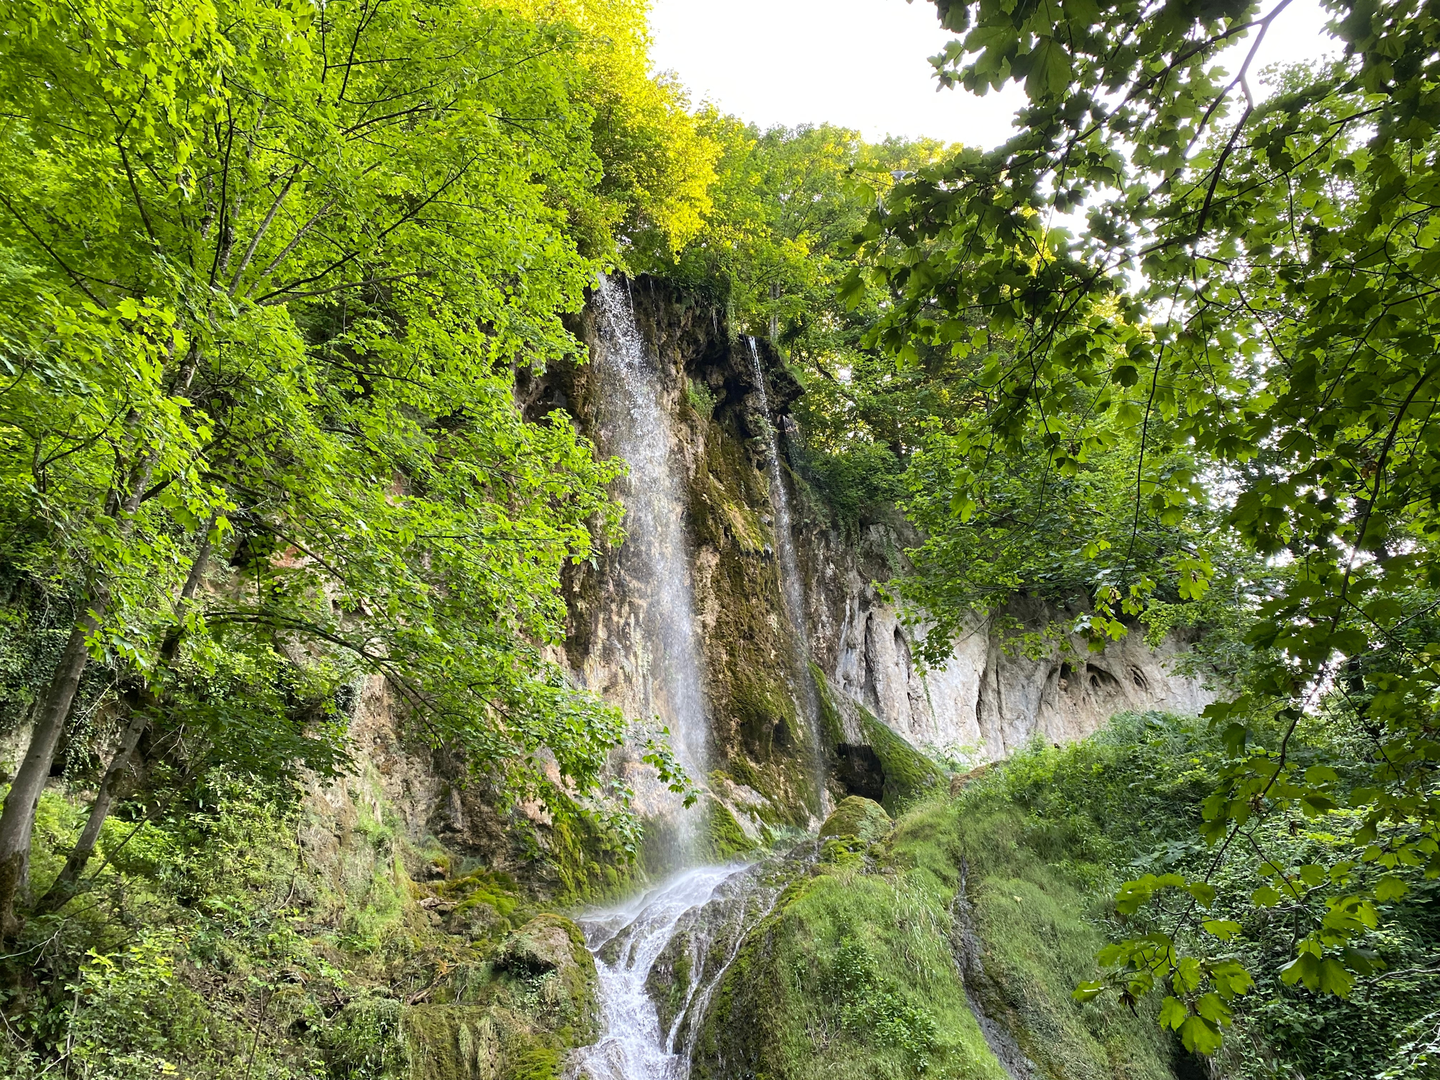 Vodopad Skakavac u Park šumi Jankovac